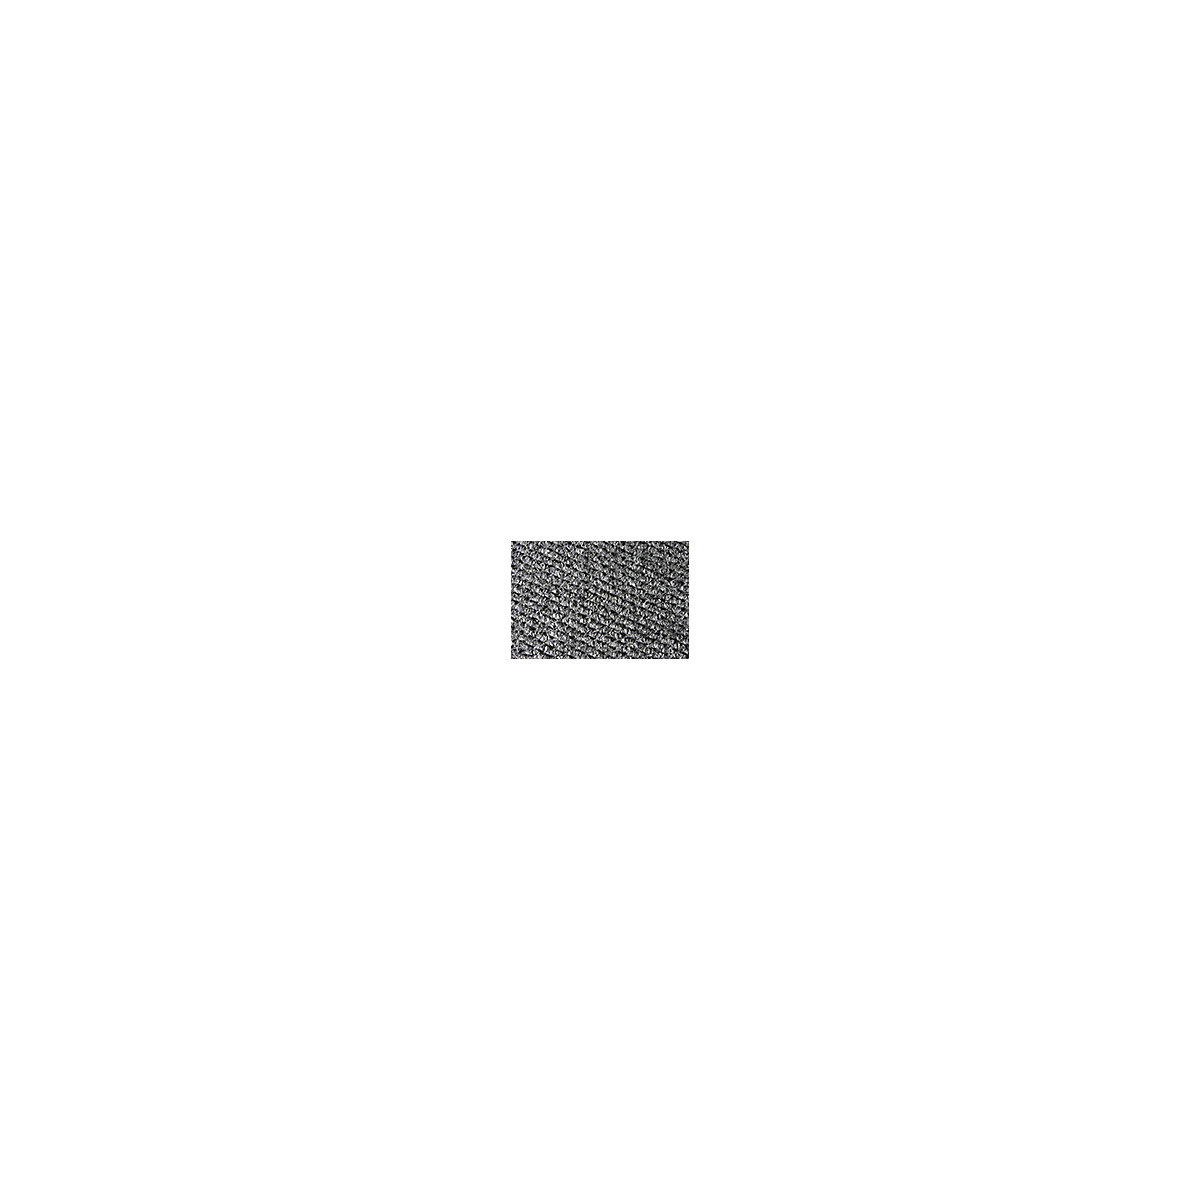 Needlefelt mat – COBA, width 1000 mm, sold by the metre, charcoal-2